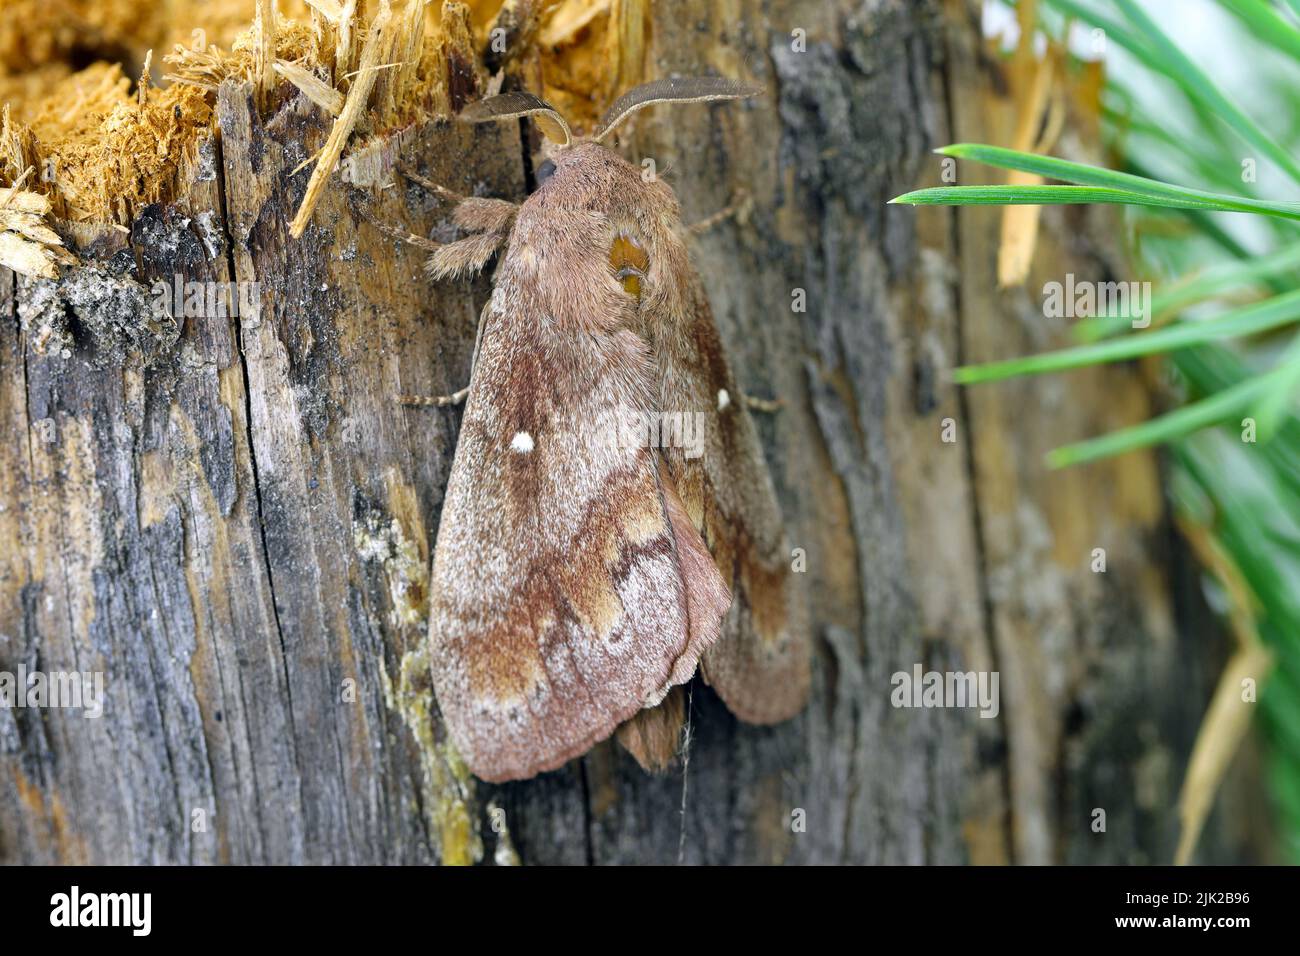 Kiefer Lappet Moth (Dendrolimus pini), männlich. Stockfoto